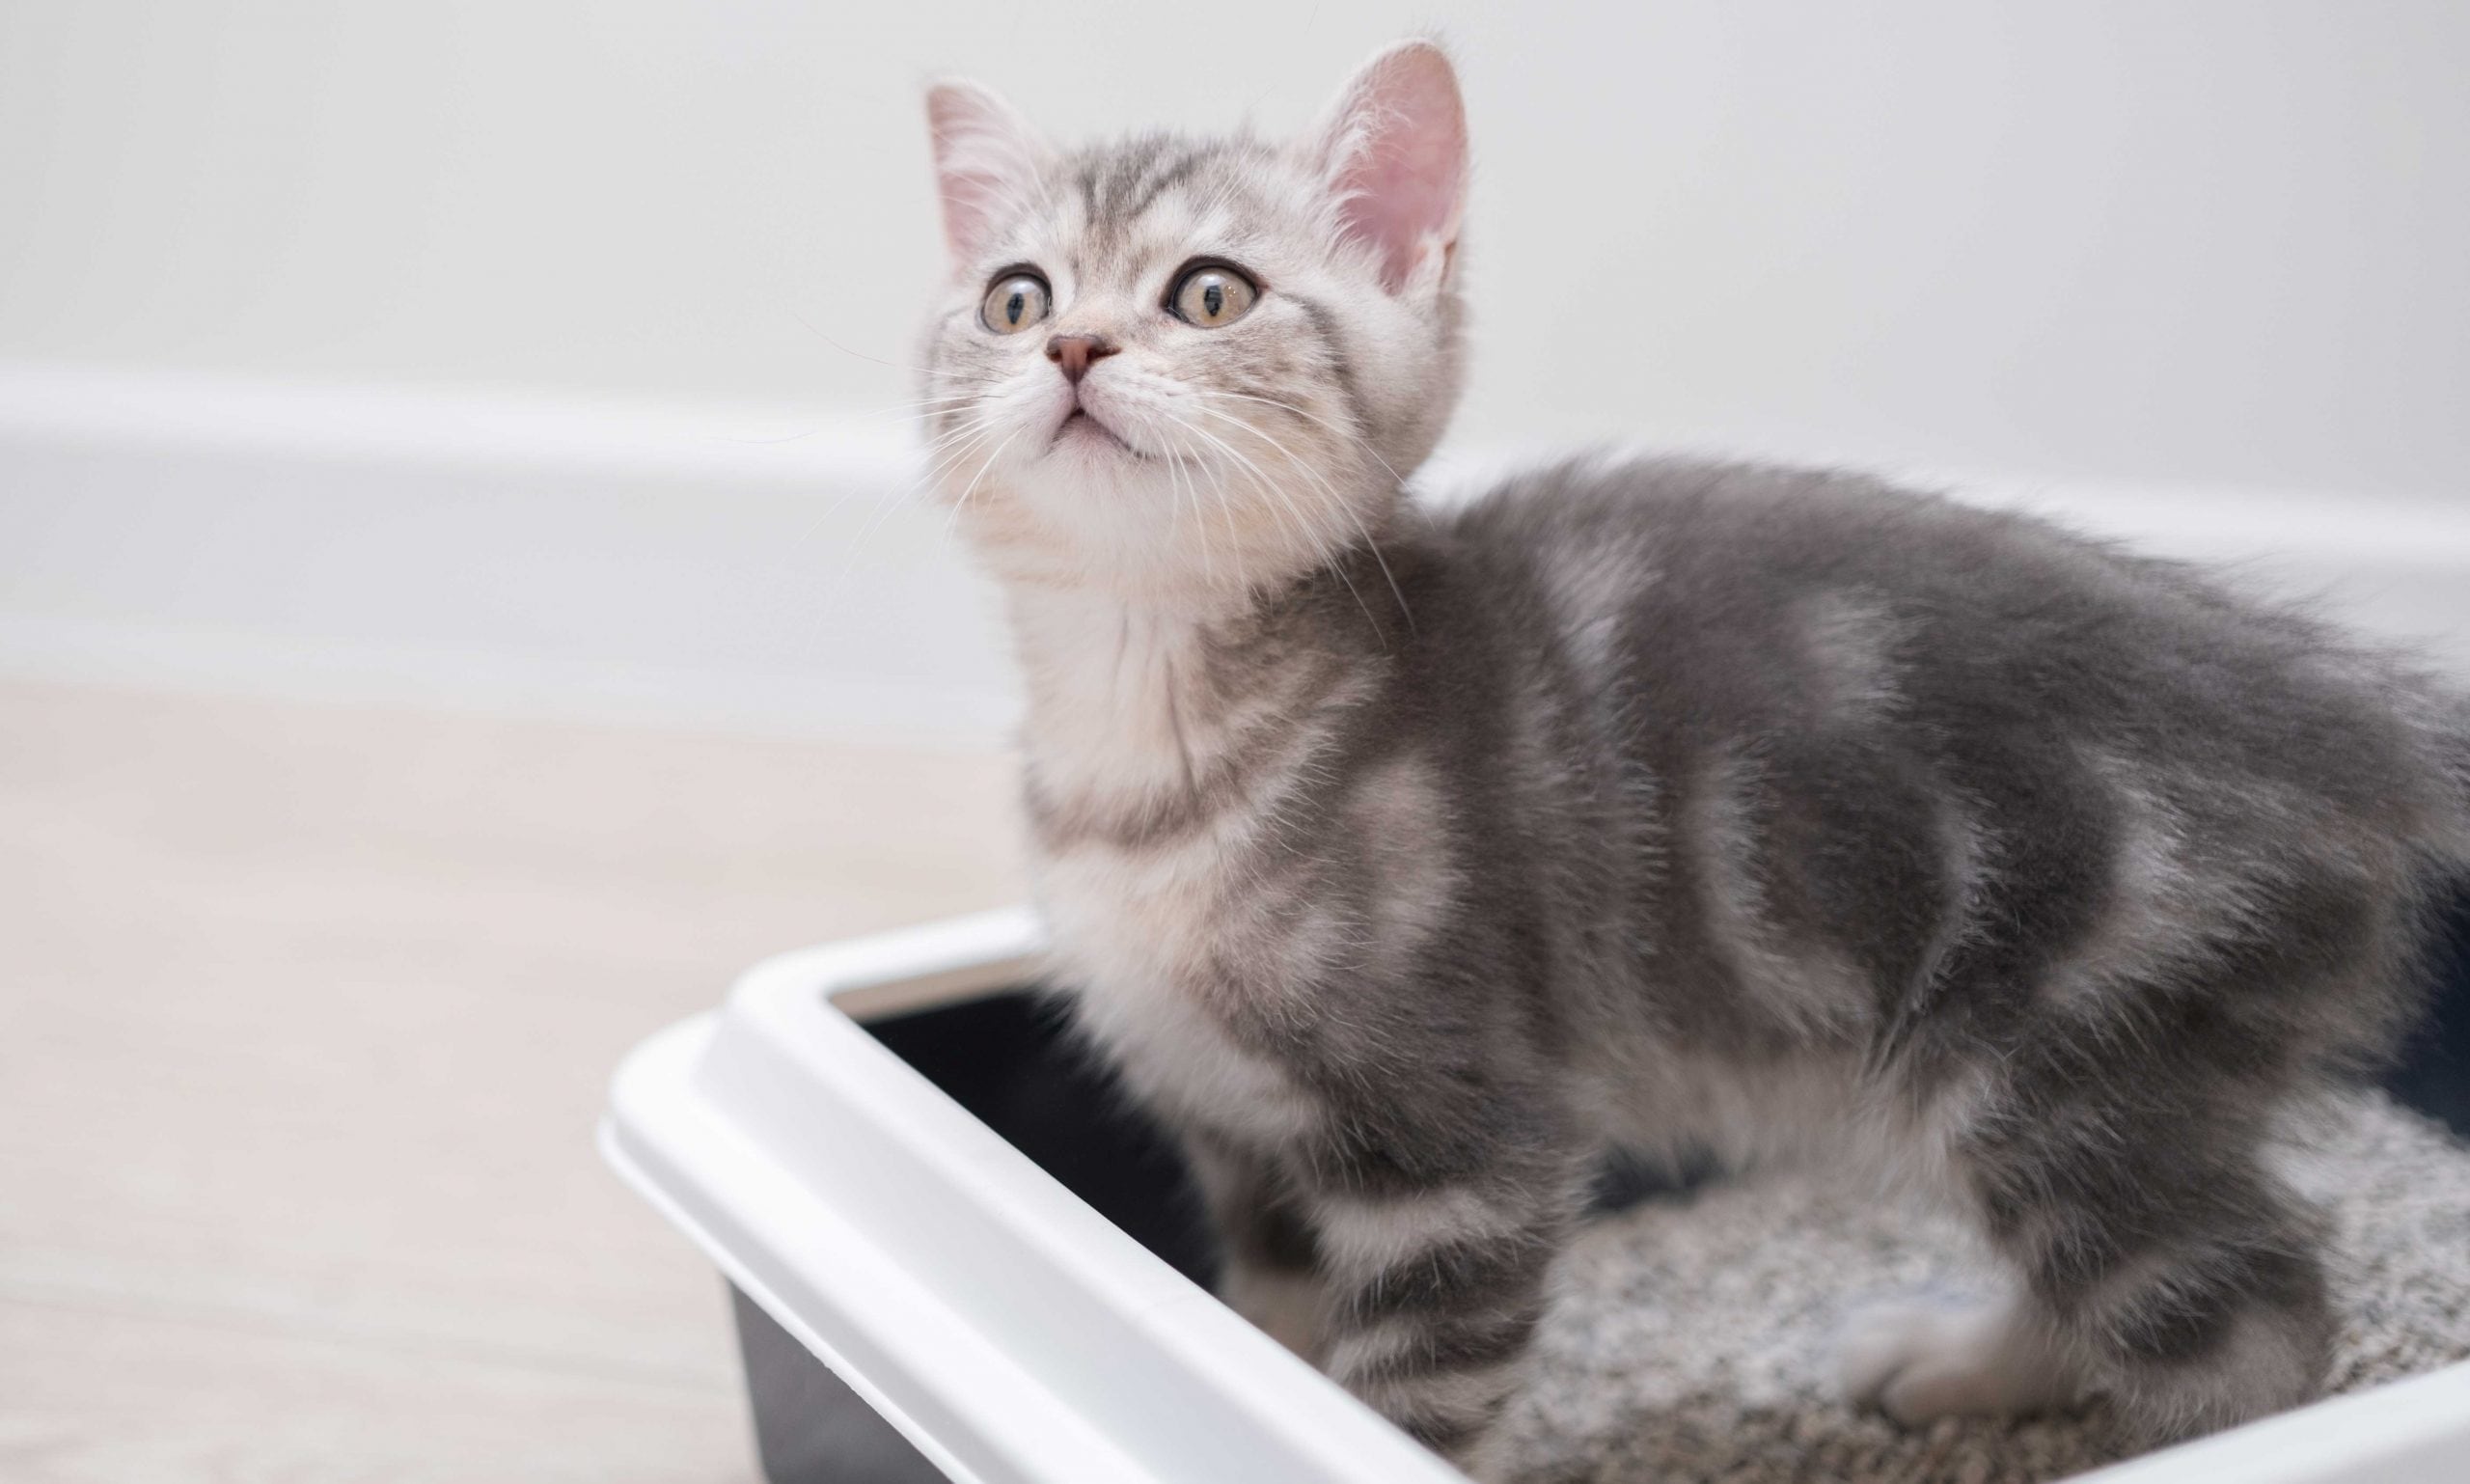 kitten constipation: kitten standing in litter box